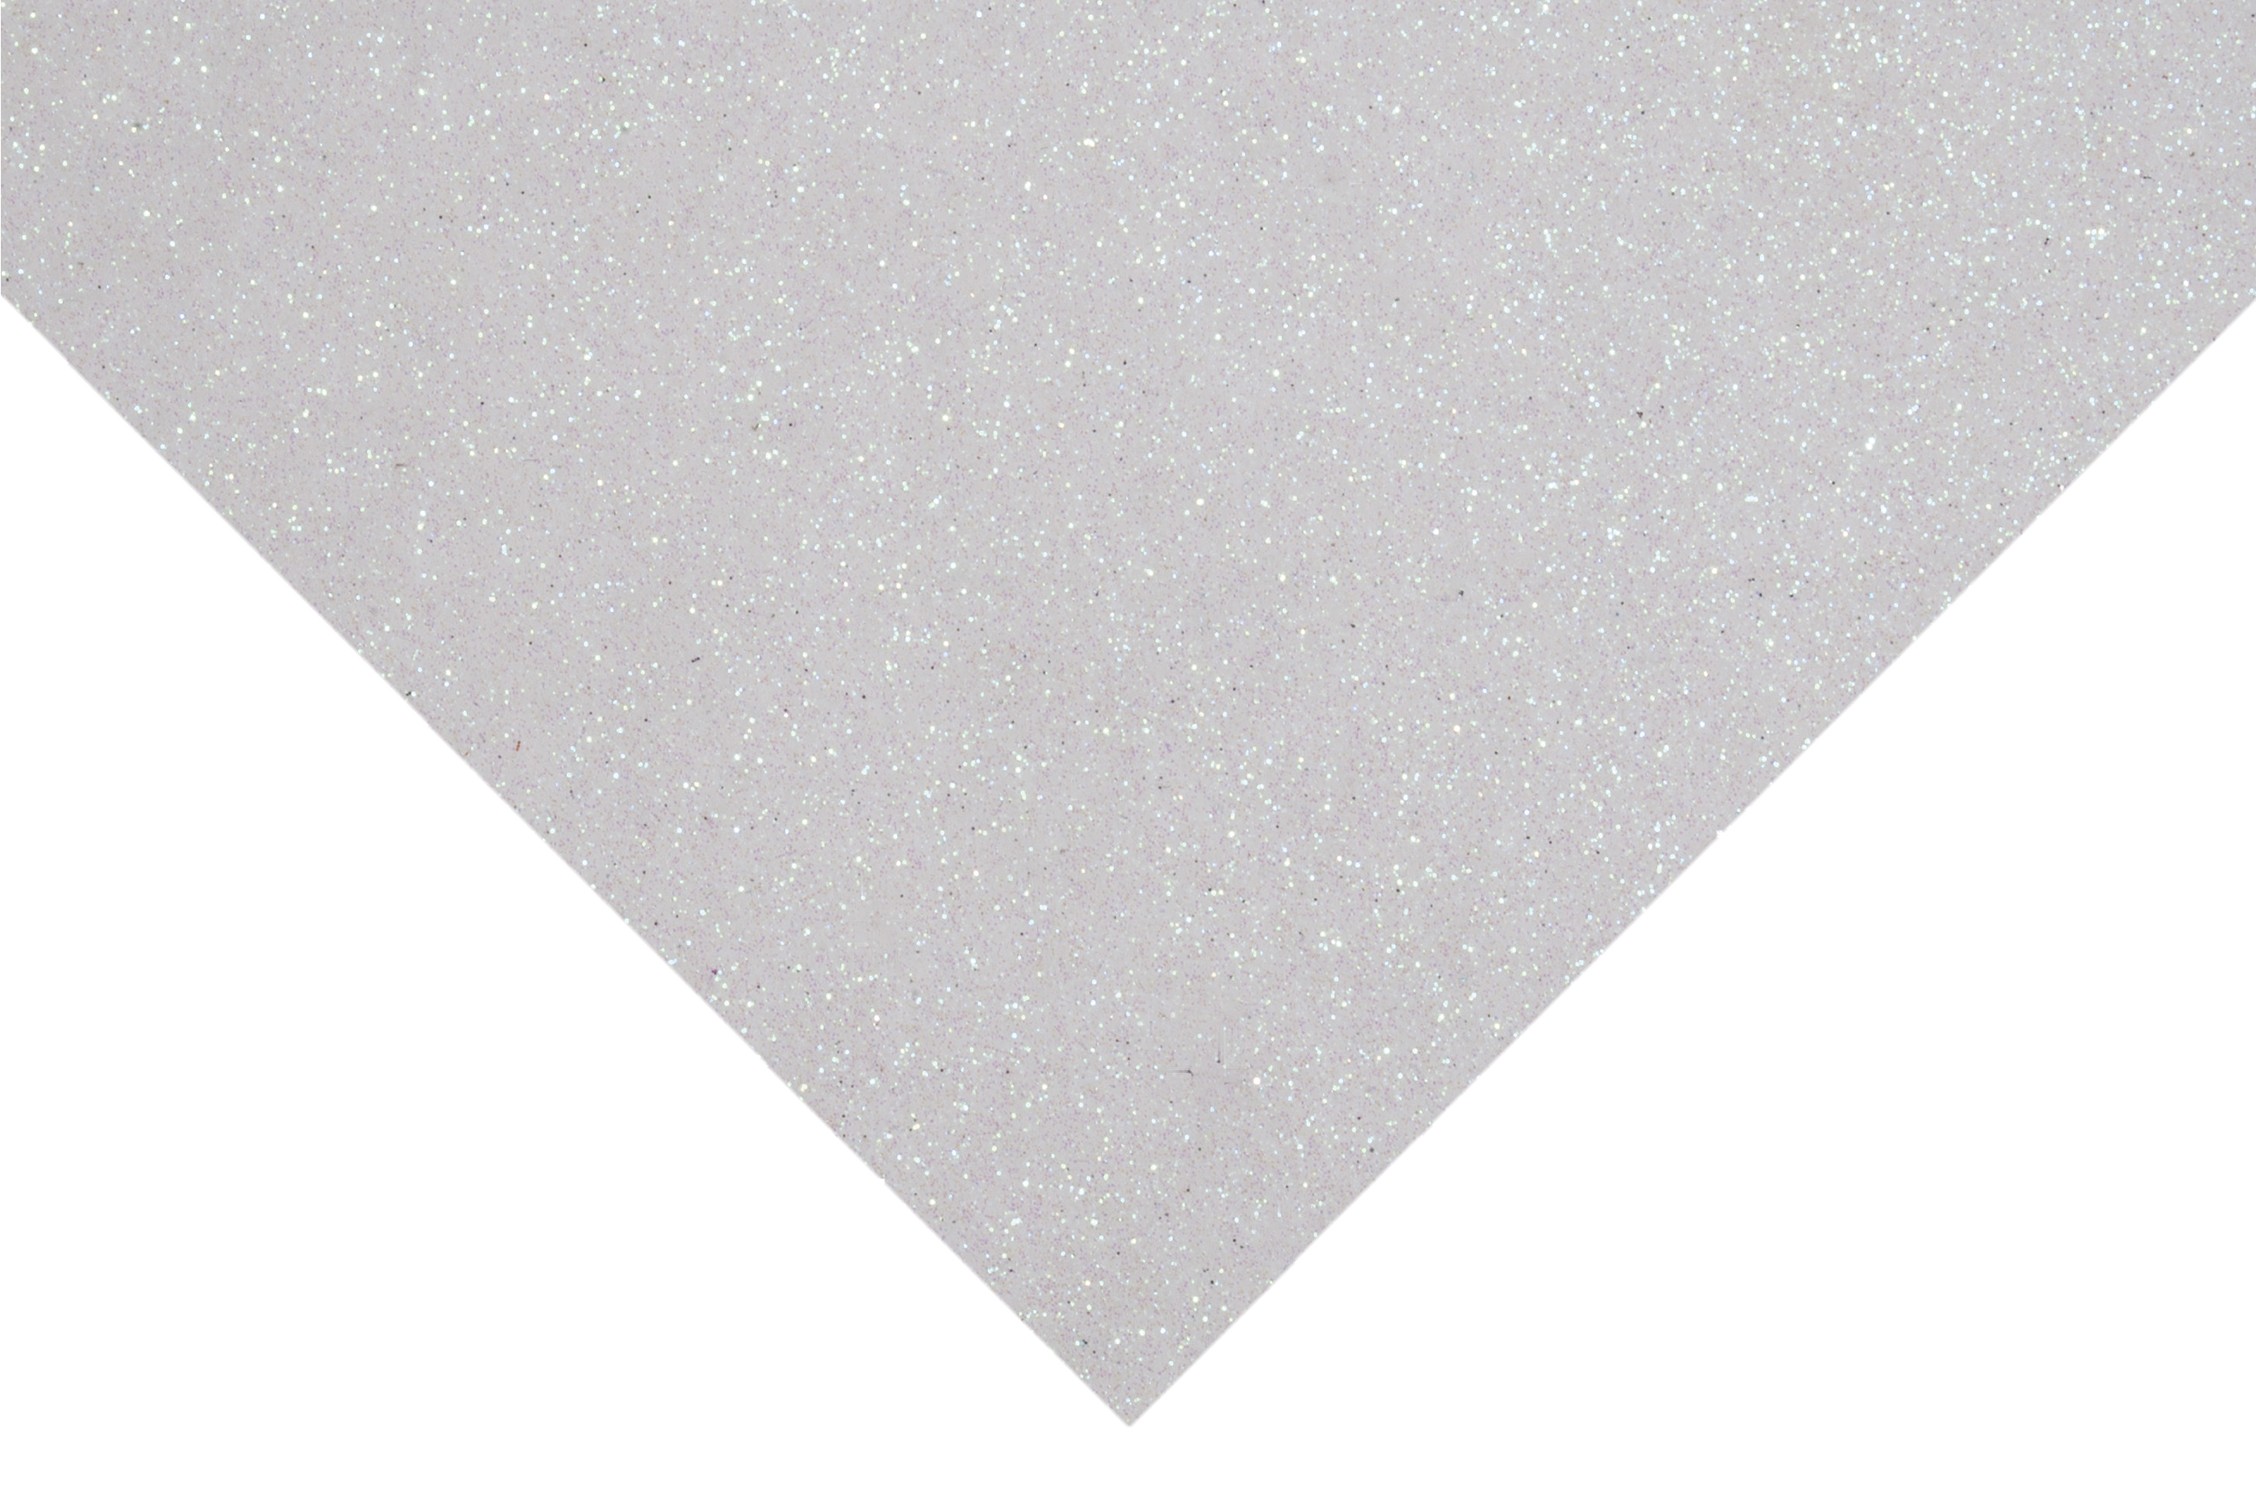 White Glitter Felt 23cmx30cm/9x11in - 1 piece